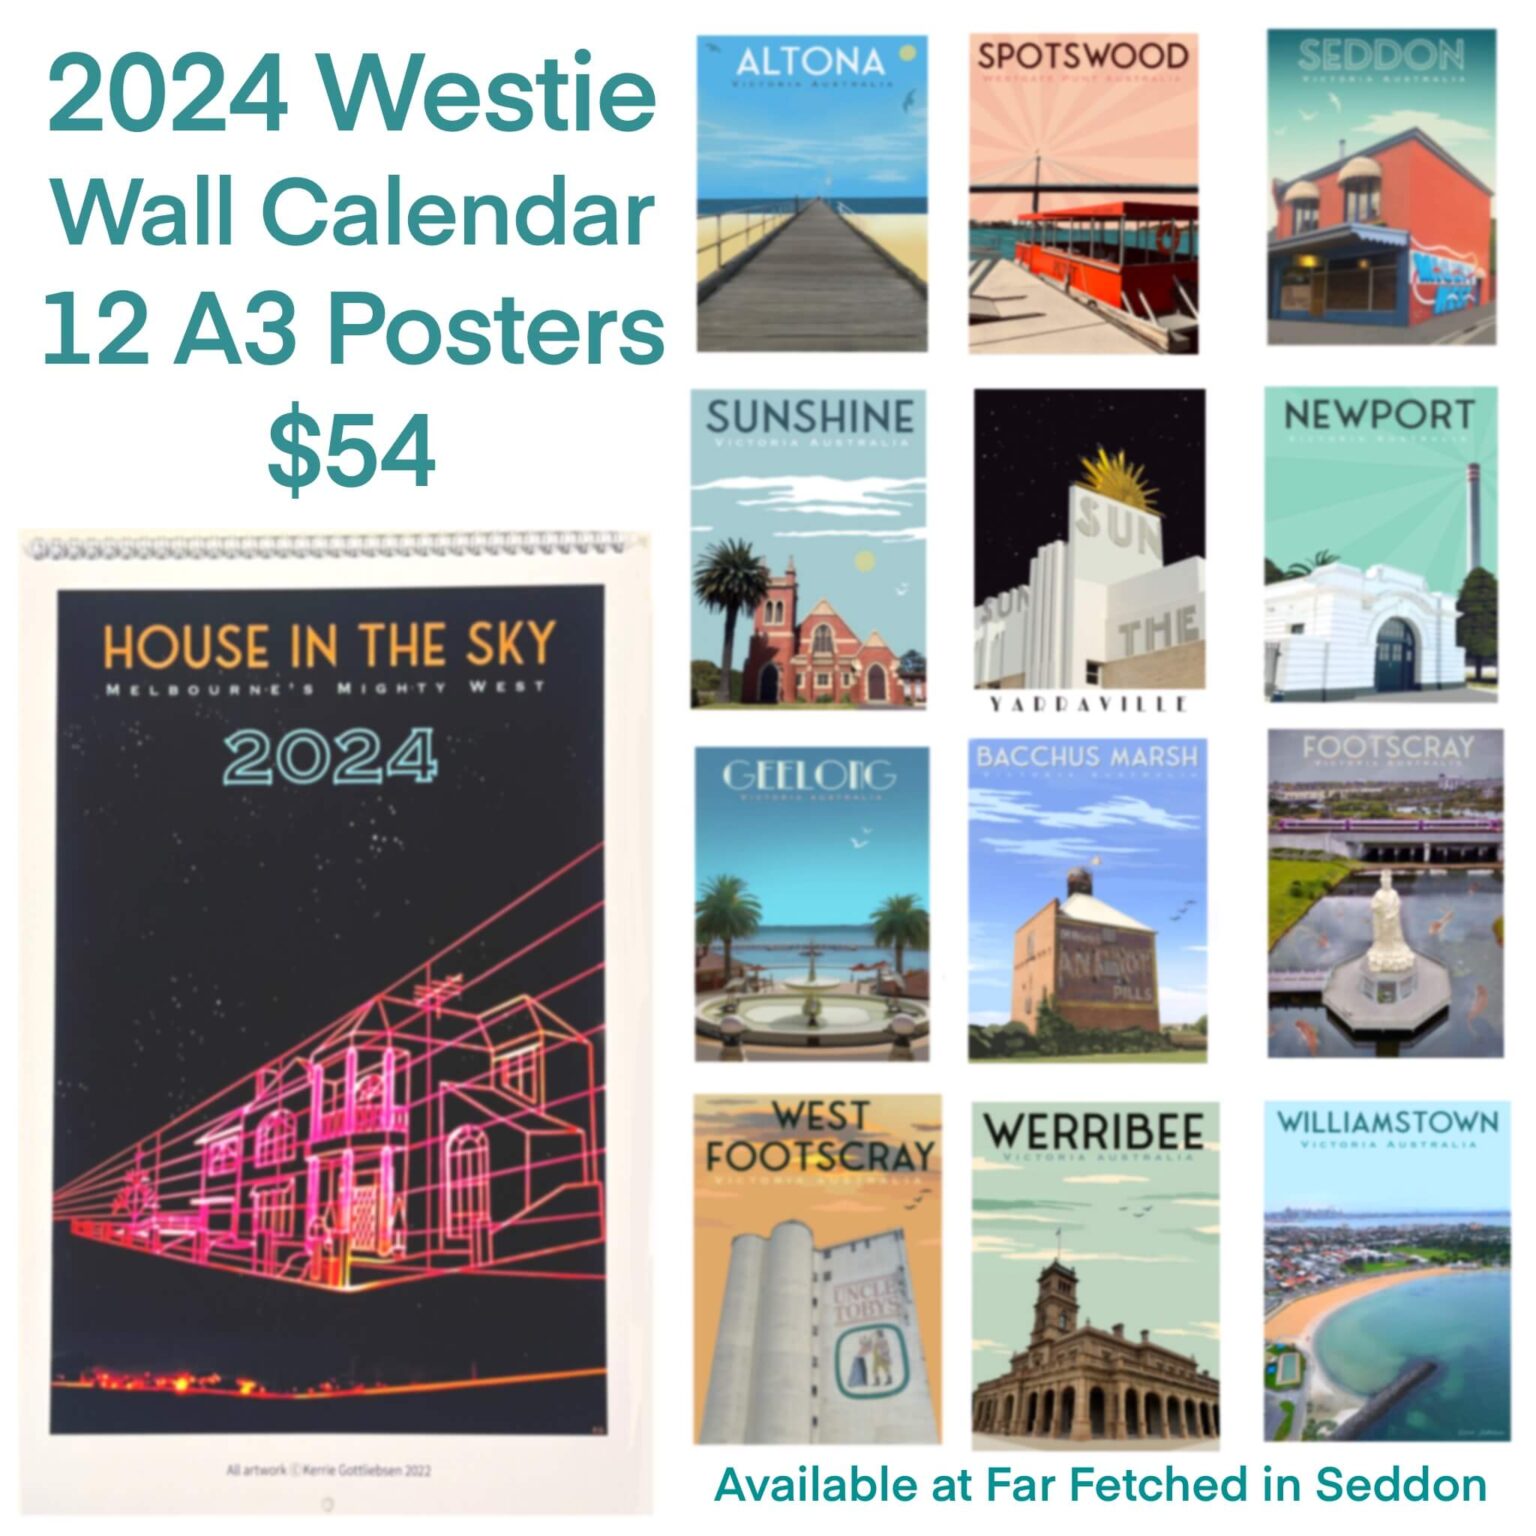 2024 Westie Wall Calendar 12 A3 Posters - Kerrie Gottliebsen